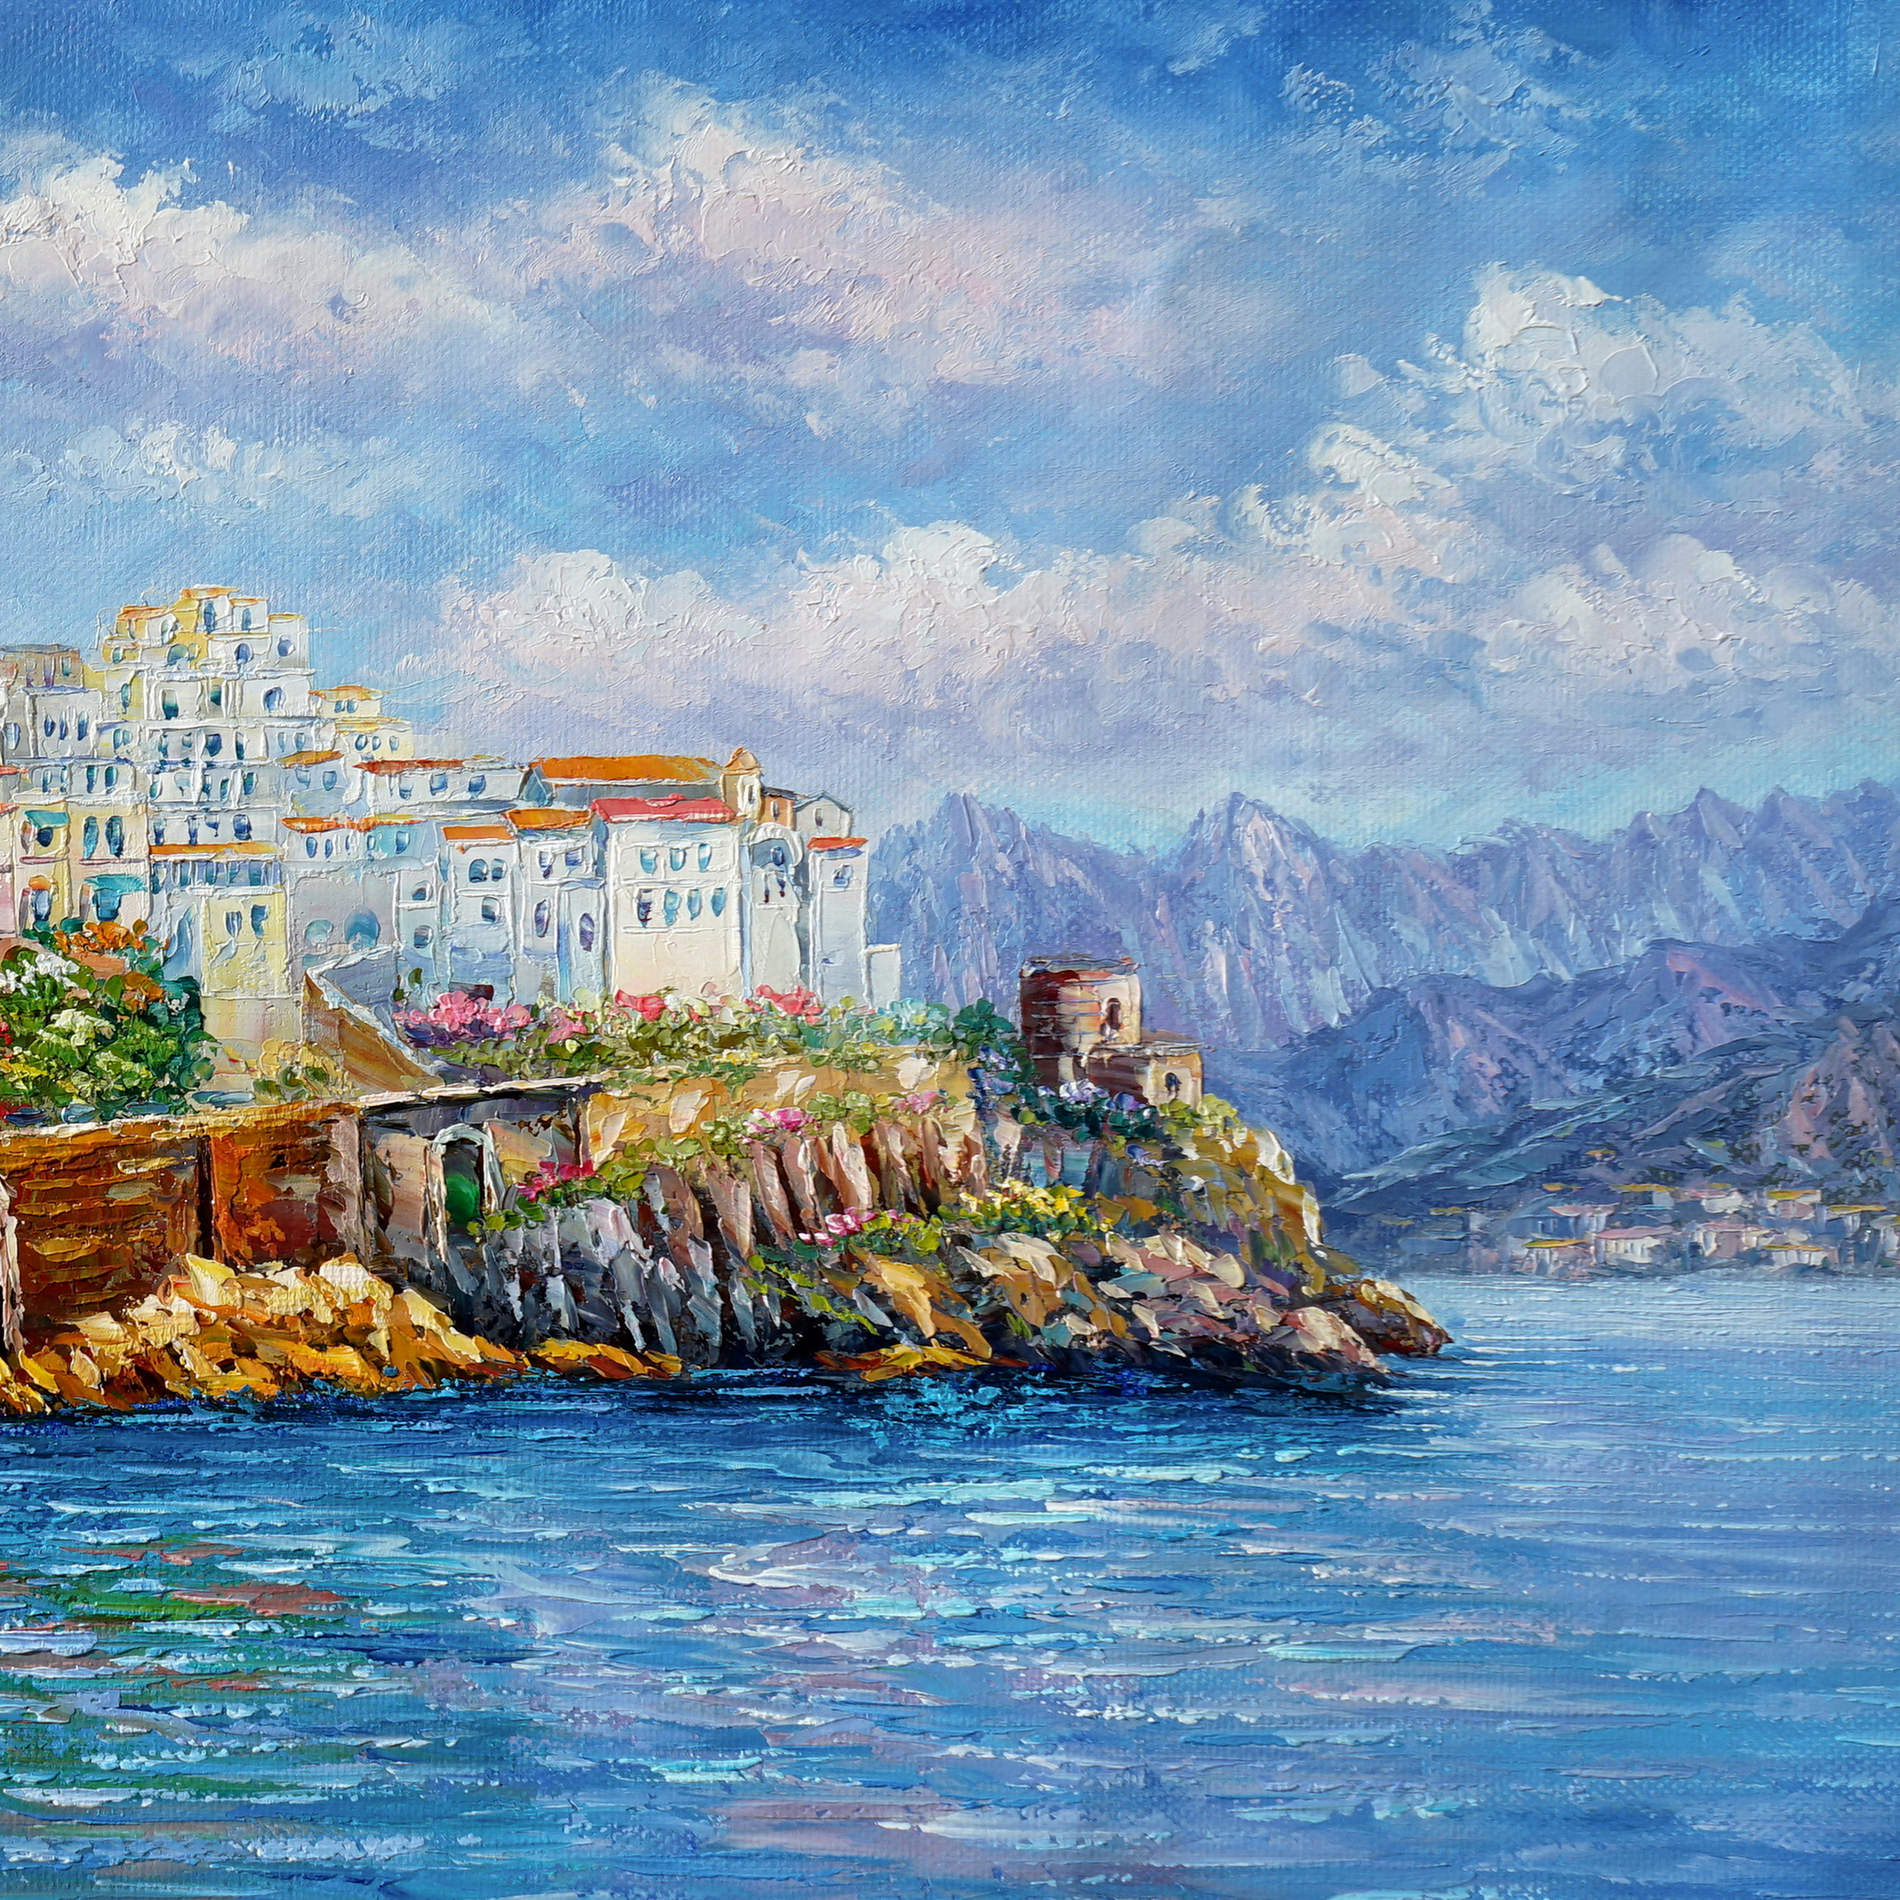 Hand painted Amalfi Coast Amalfi 60x120cm